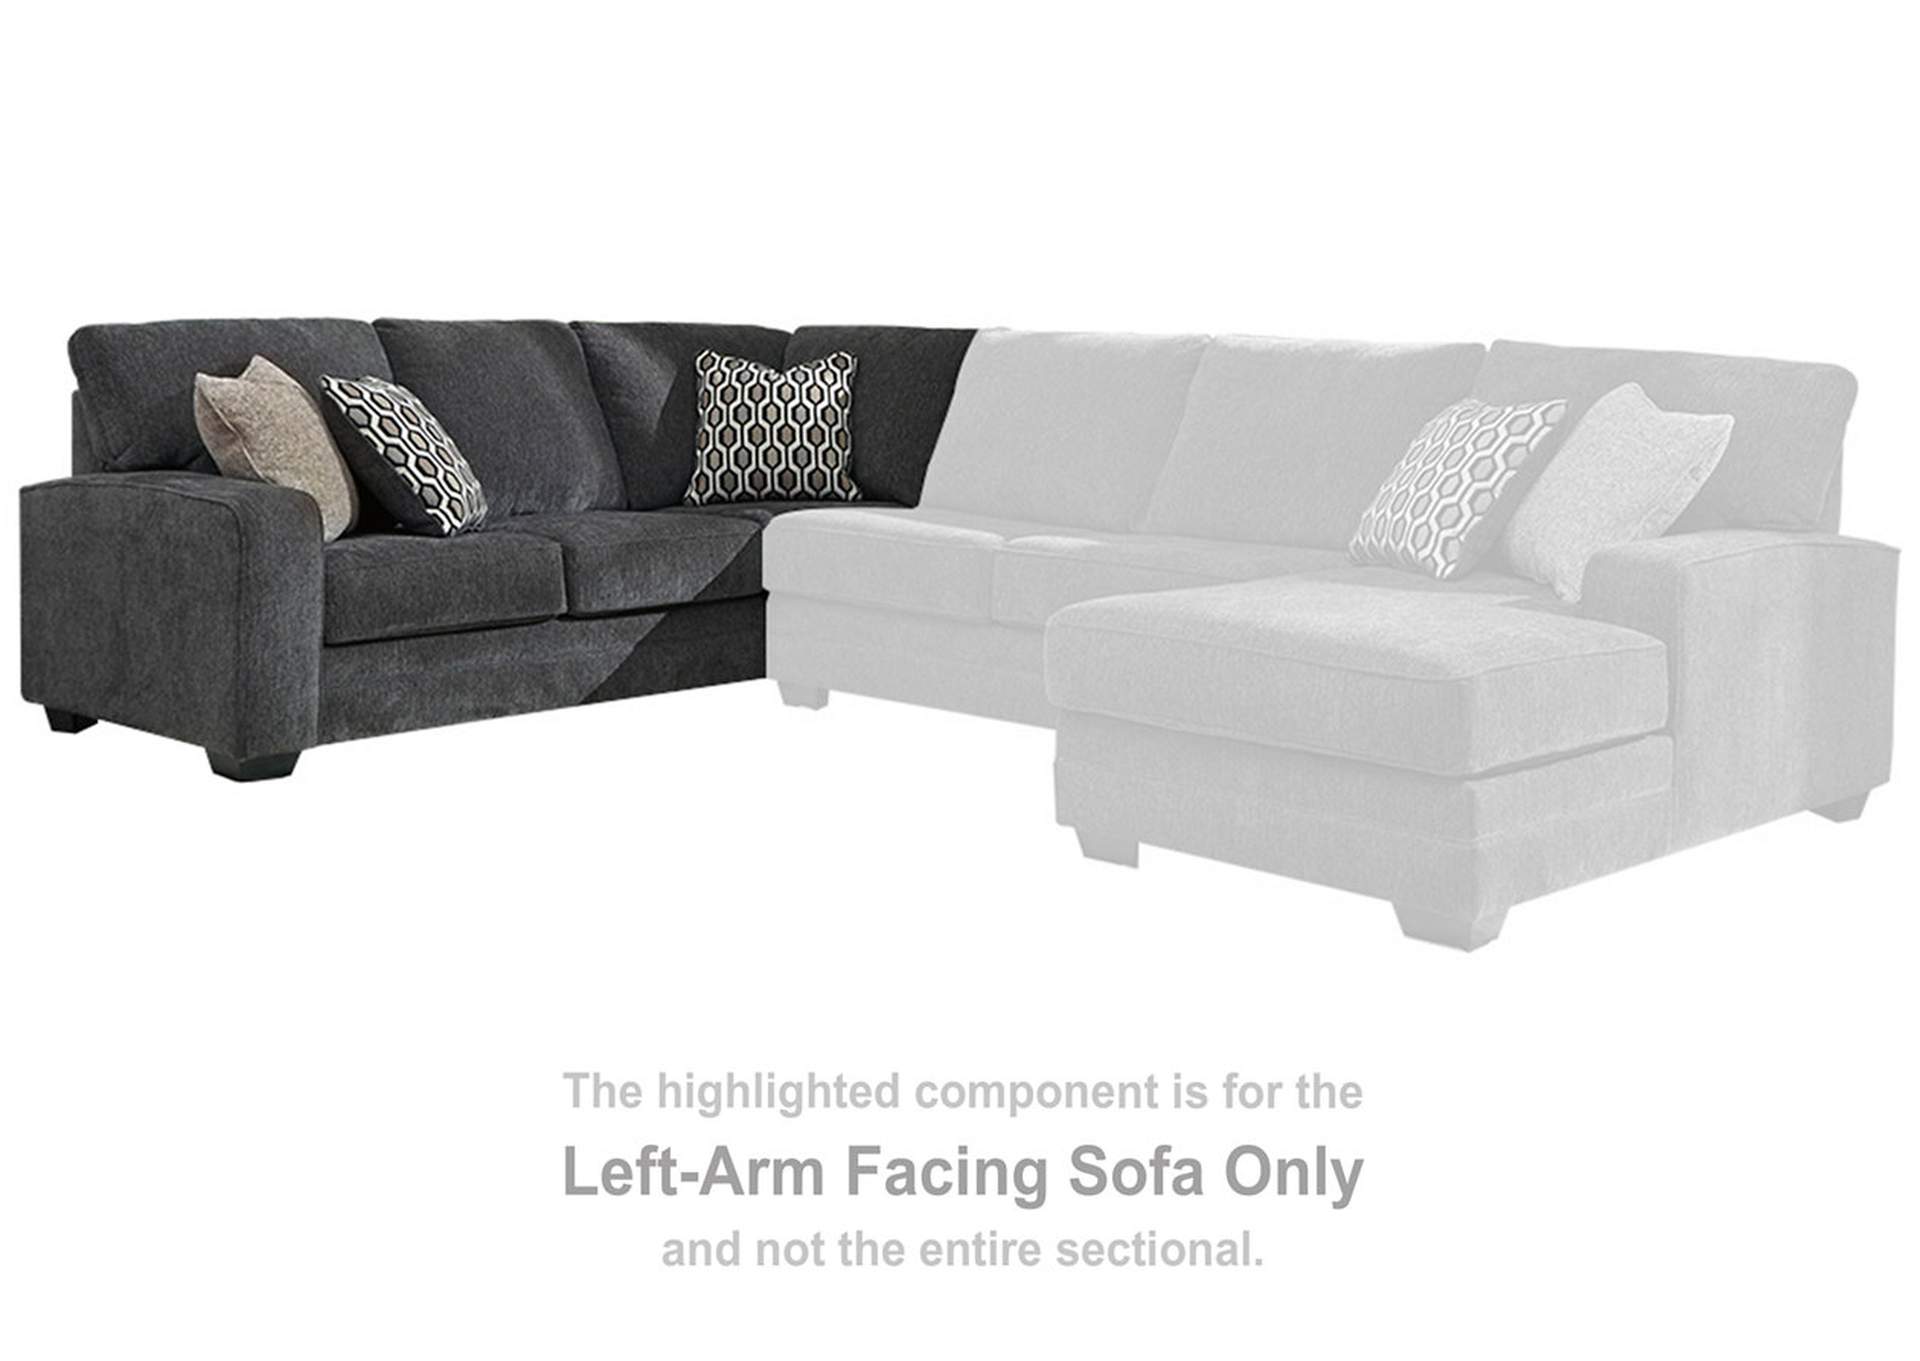 Tracling Left-Arm Facing Sofa,Benchcraft